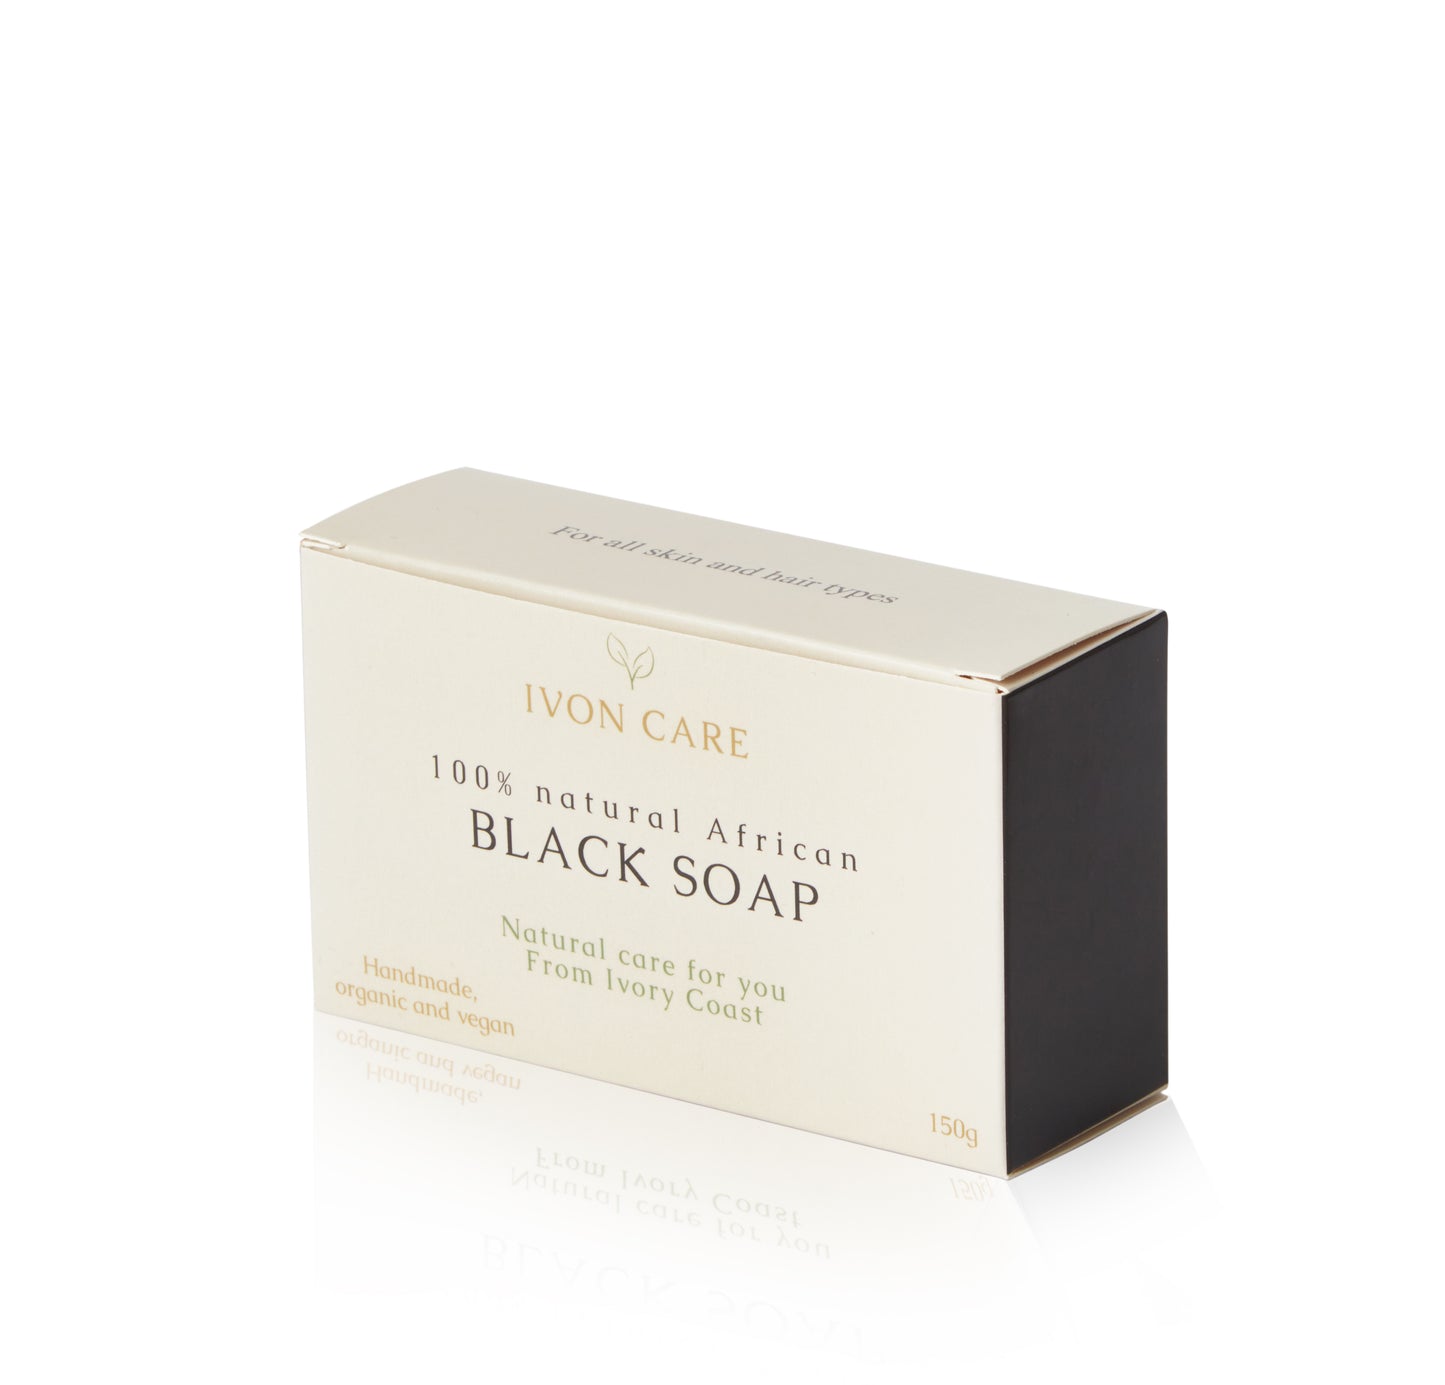 African Black Soap 150g